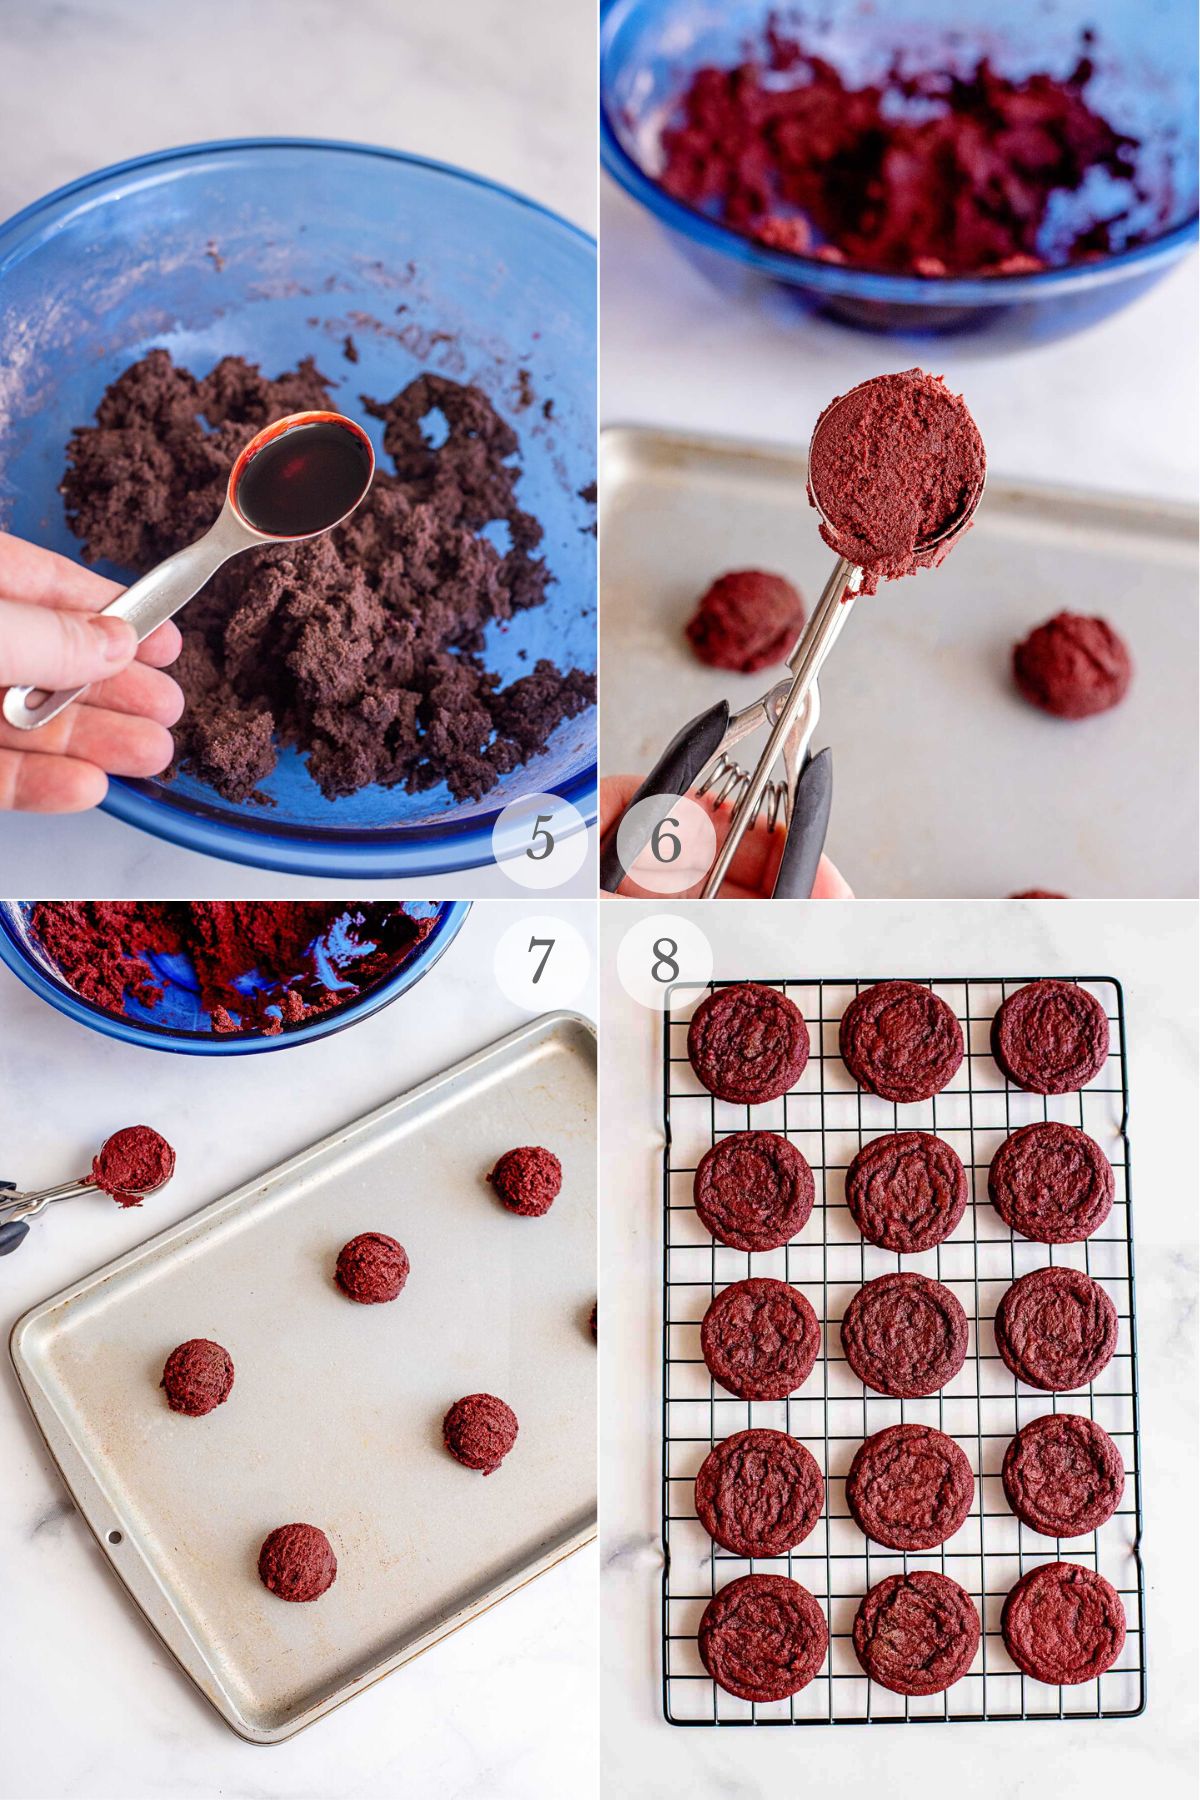 red velvet cookies recipe steps 5-8.